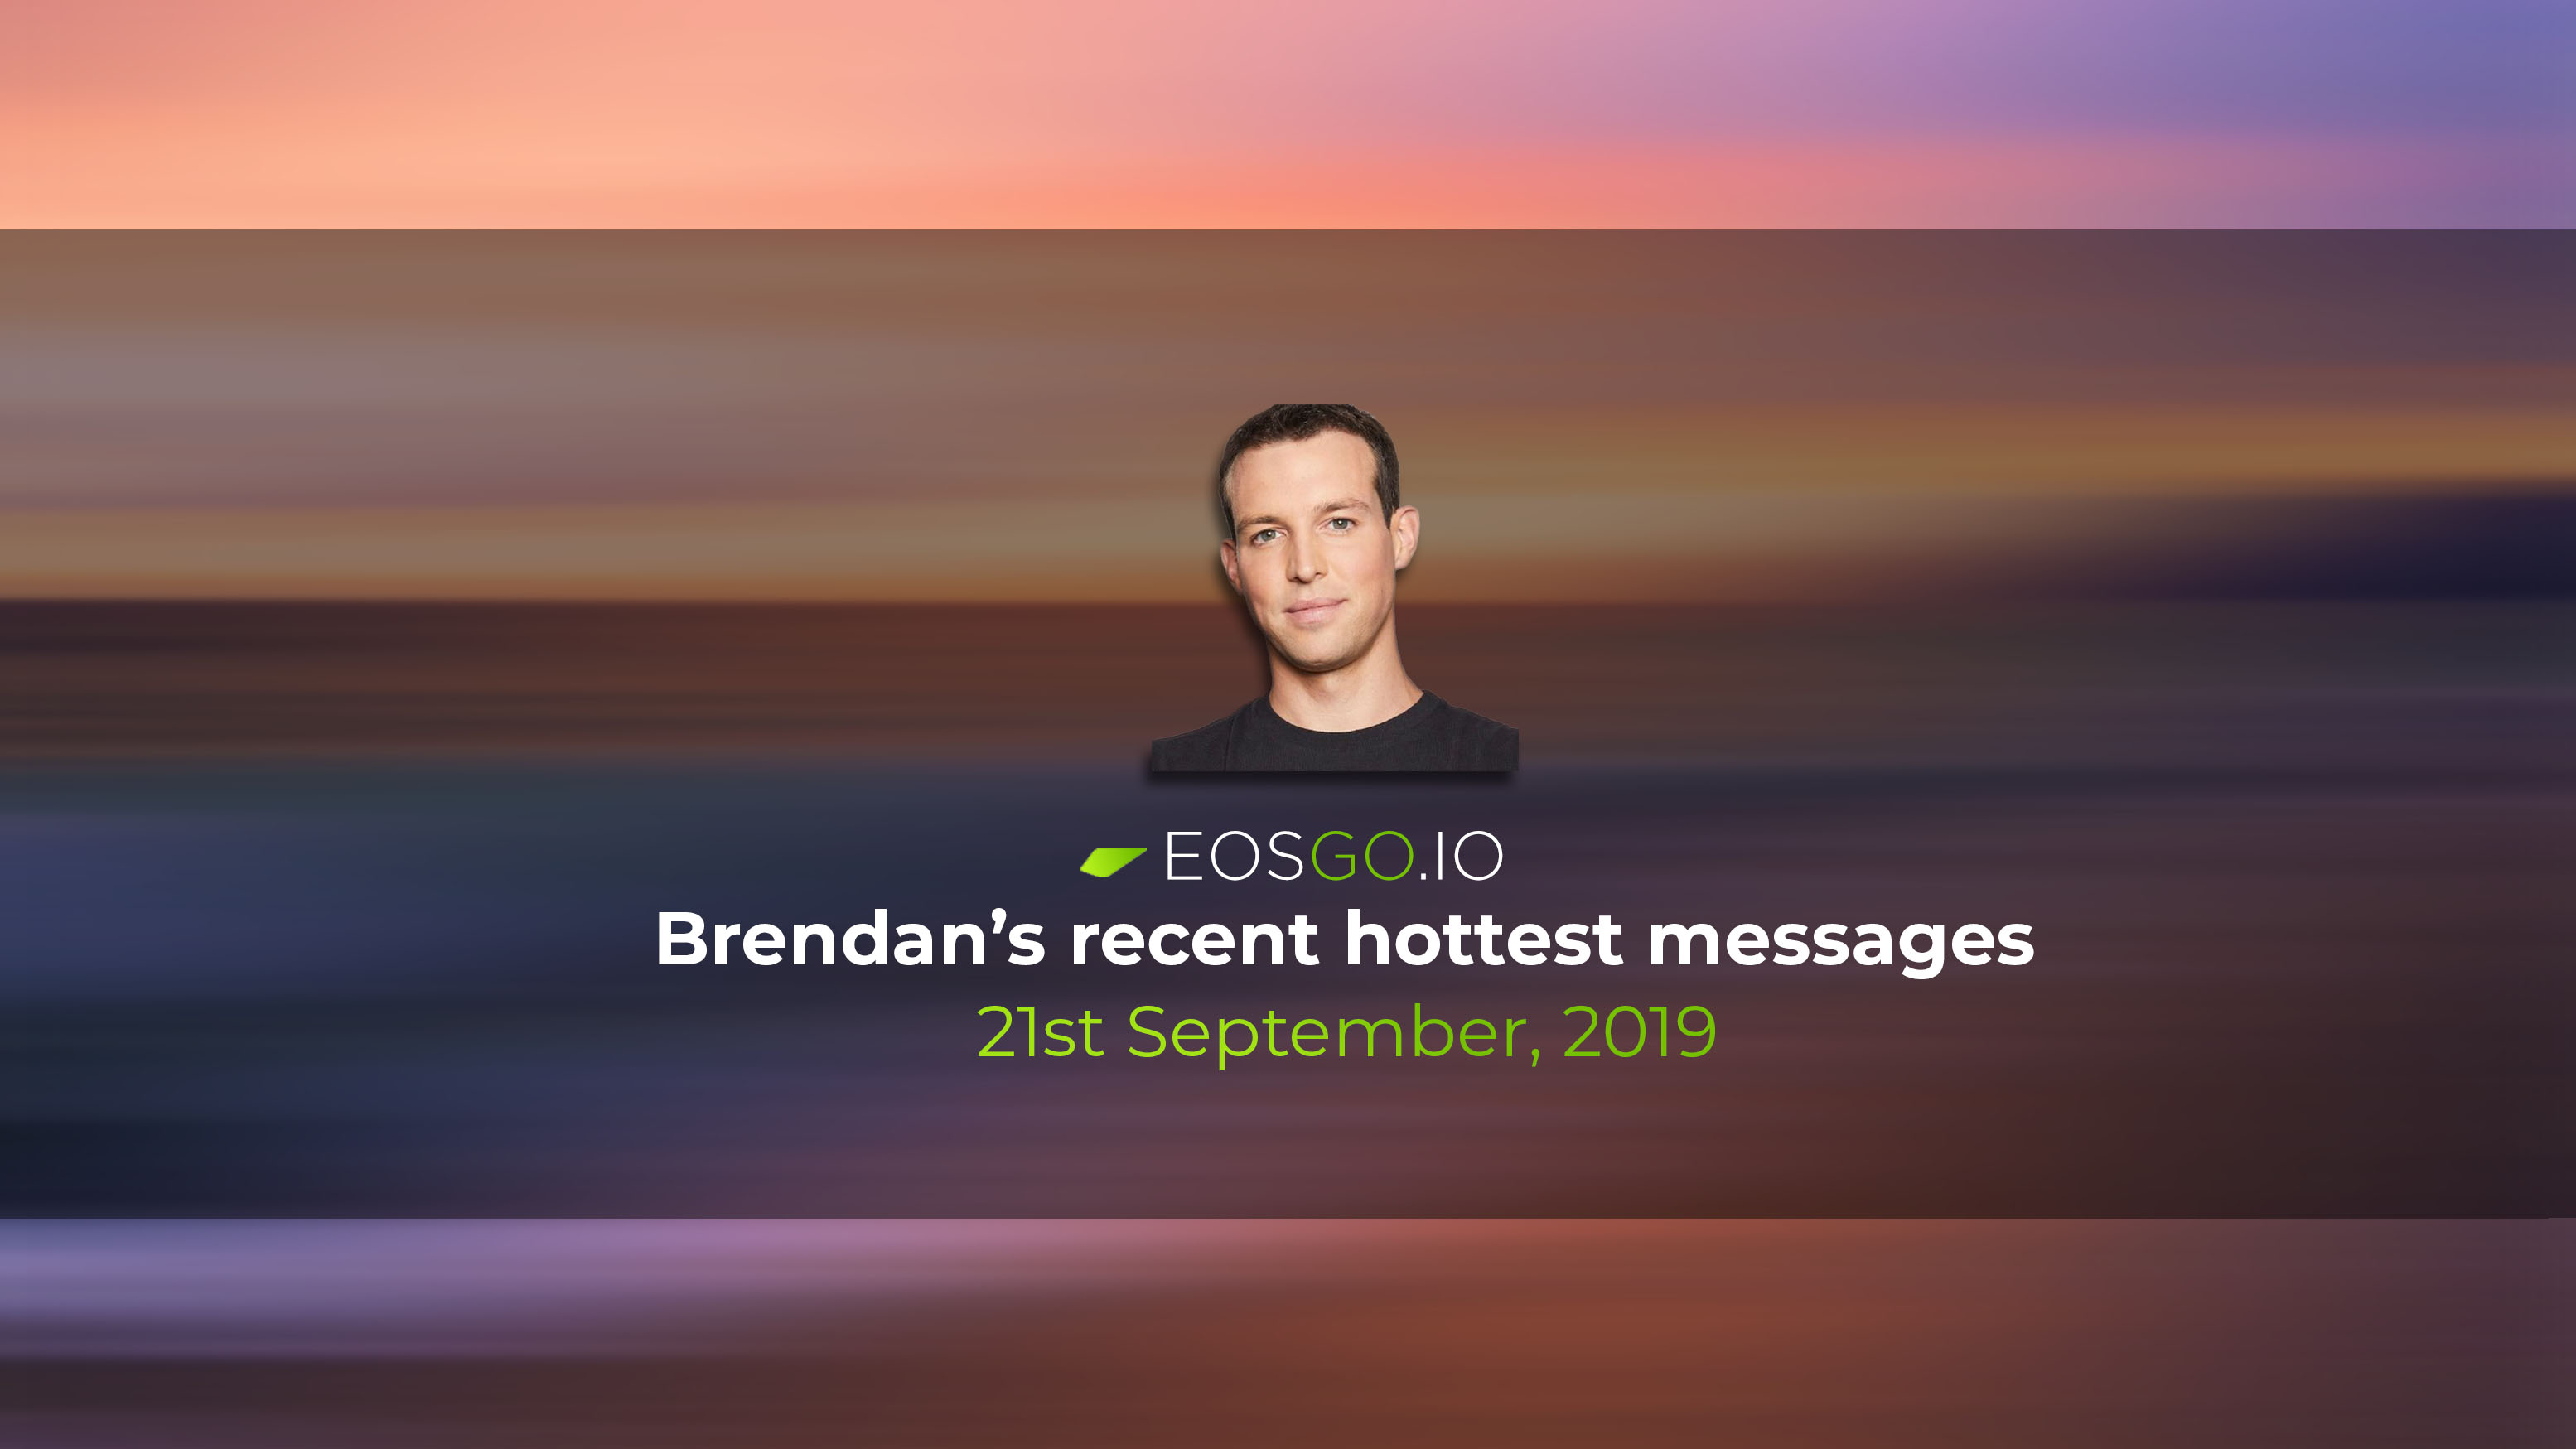 Brendan’s recent hottest messages, 21st September